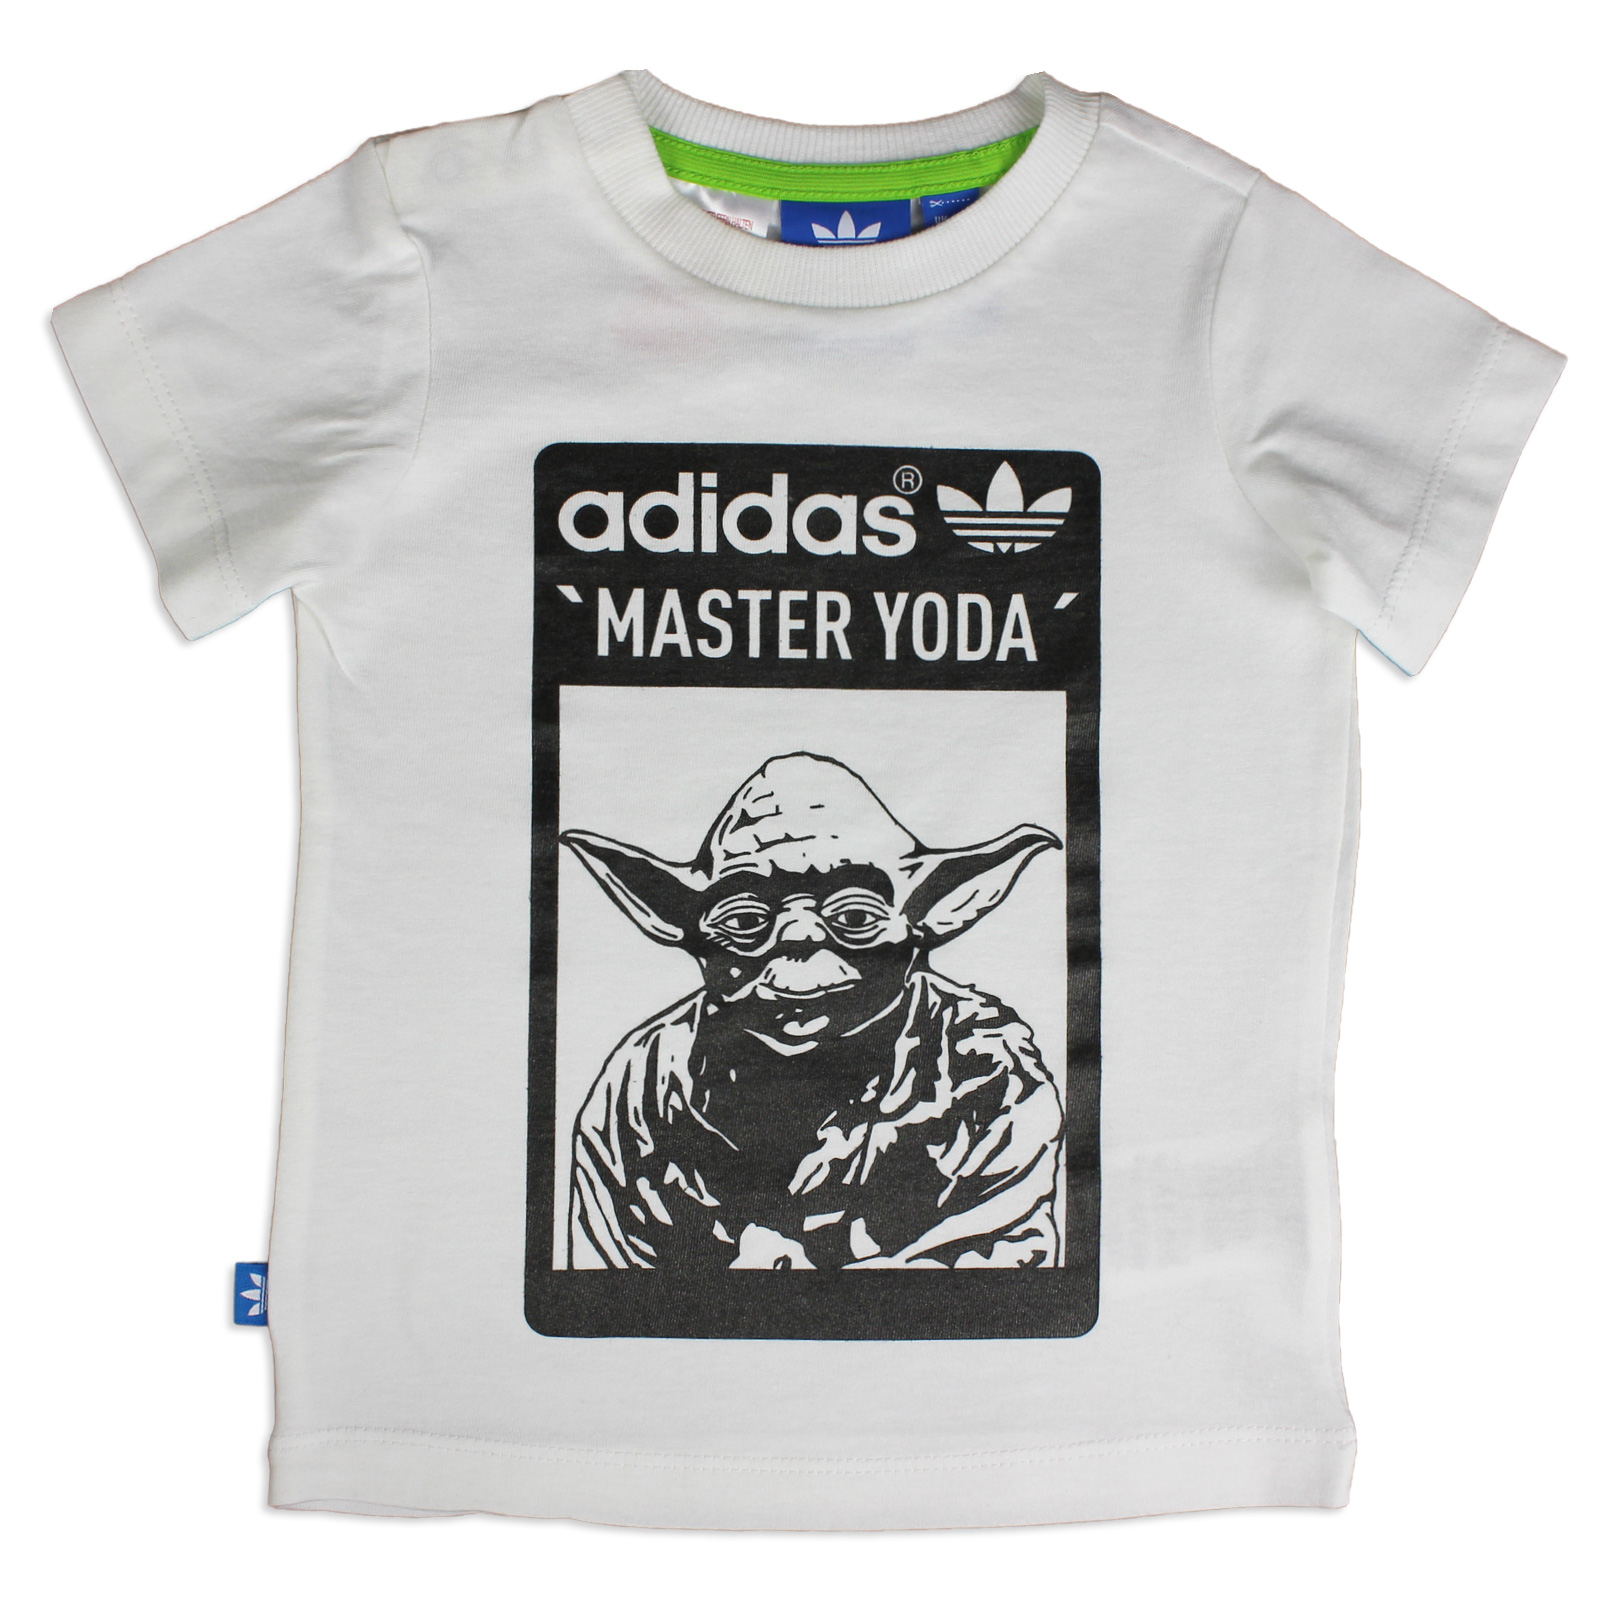 adidas yoda t shirt - 56% remise - www 